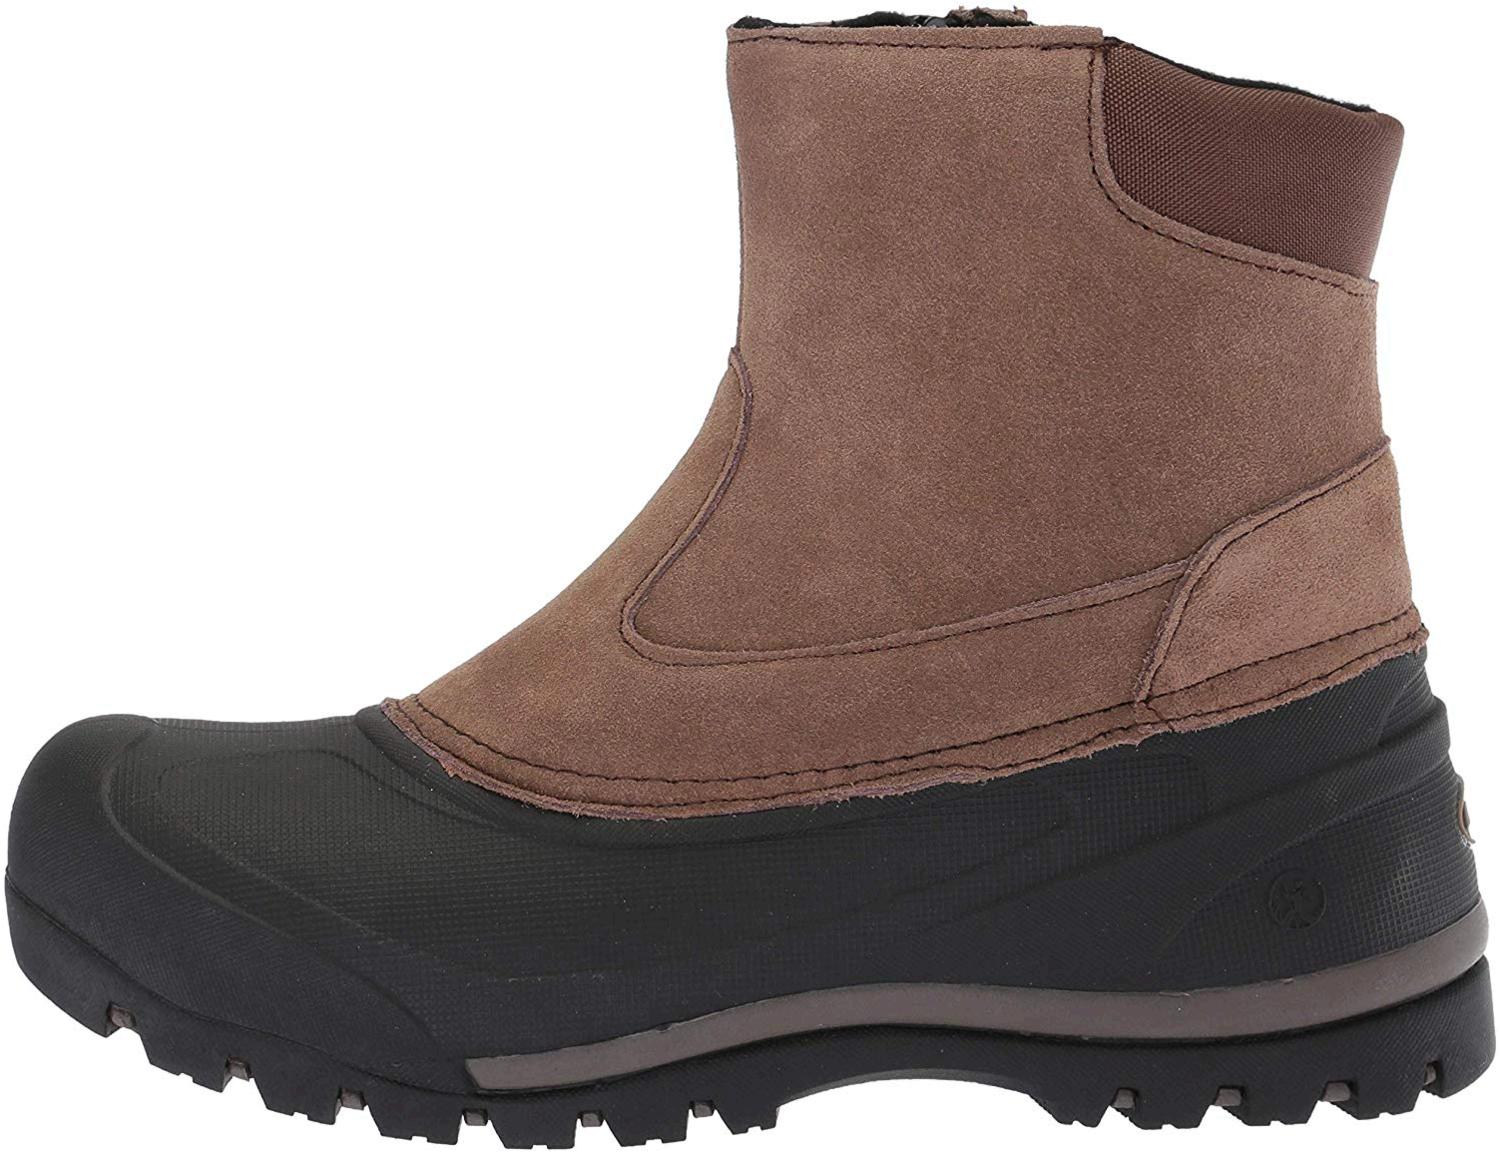 Northside Men's Billings Snow Boot, Medium Brown, Size 12.0 LZYv | eBay